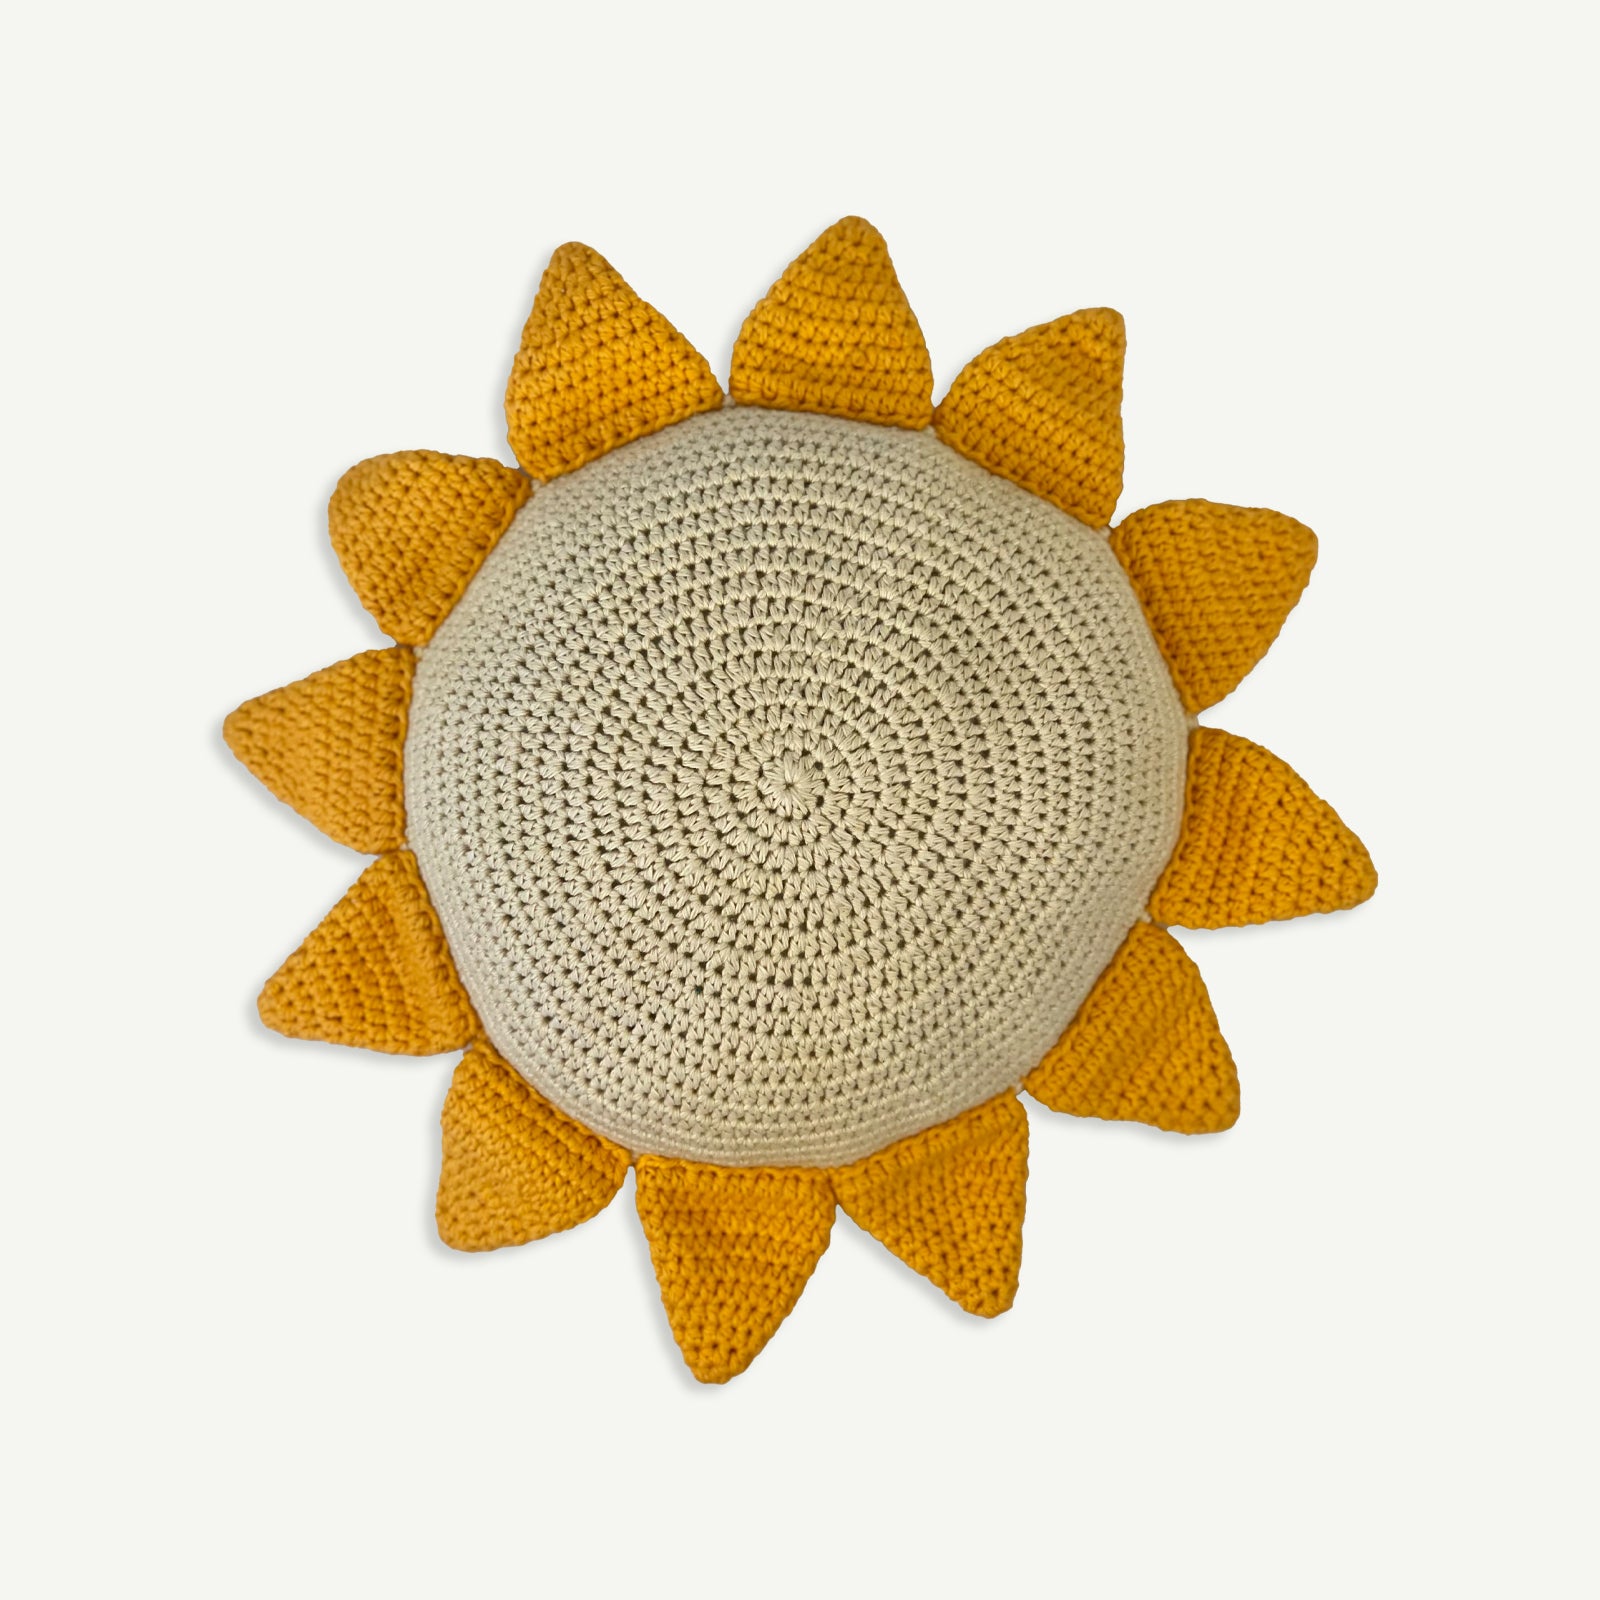 Sunburst Crochet Cushion